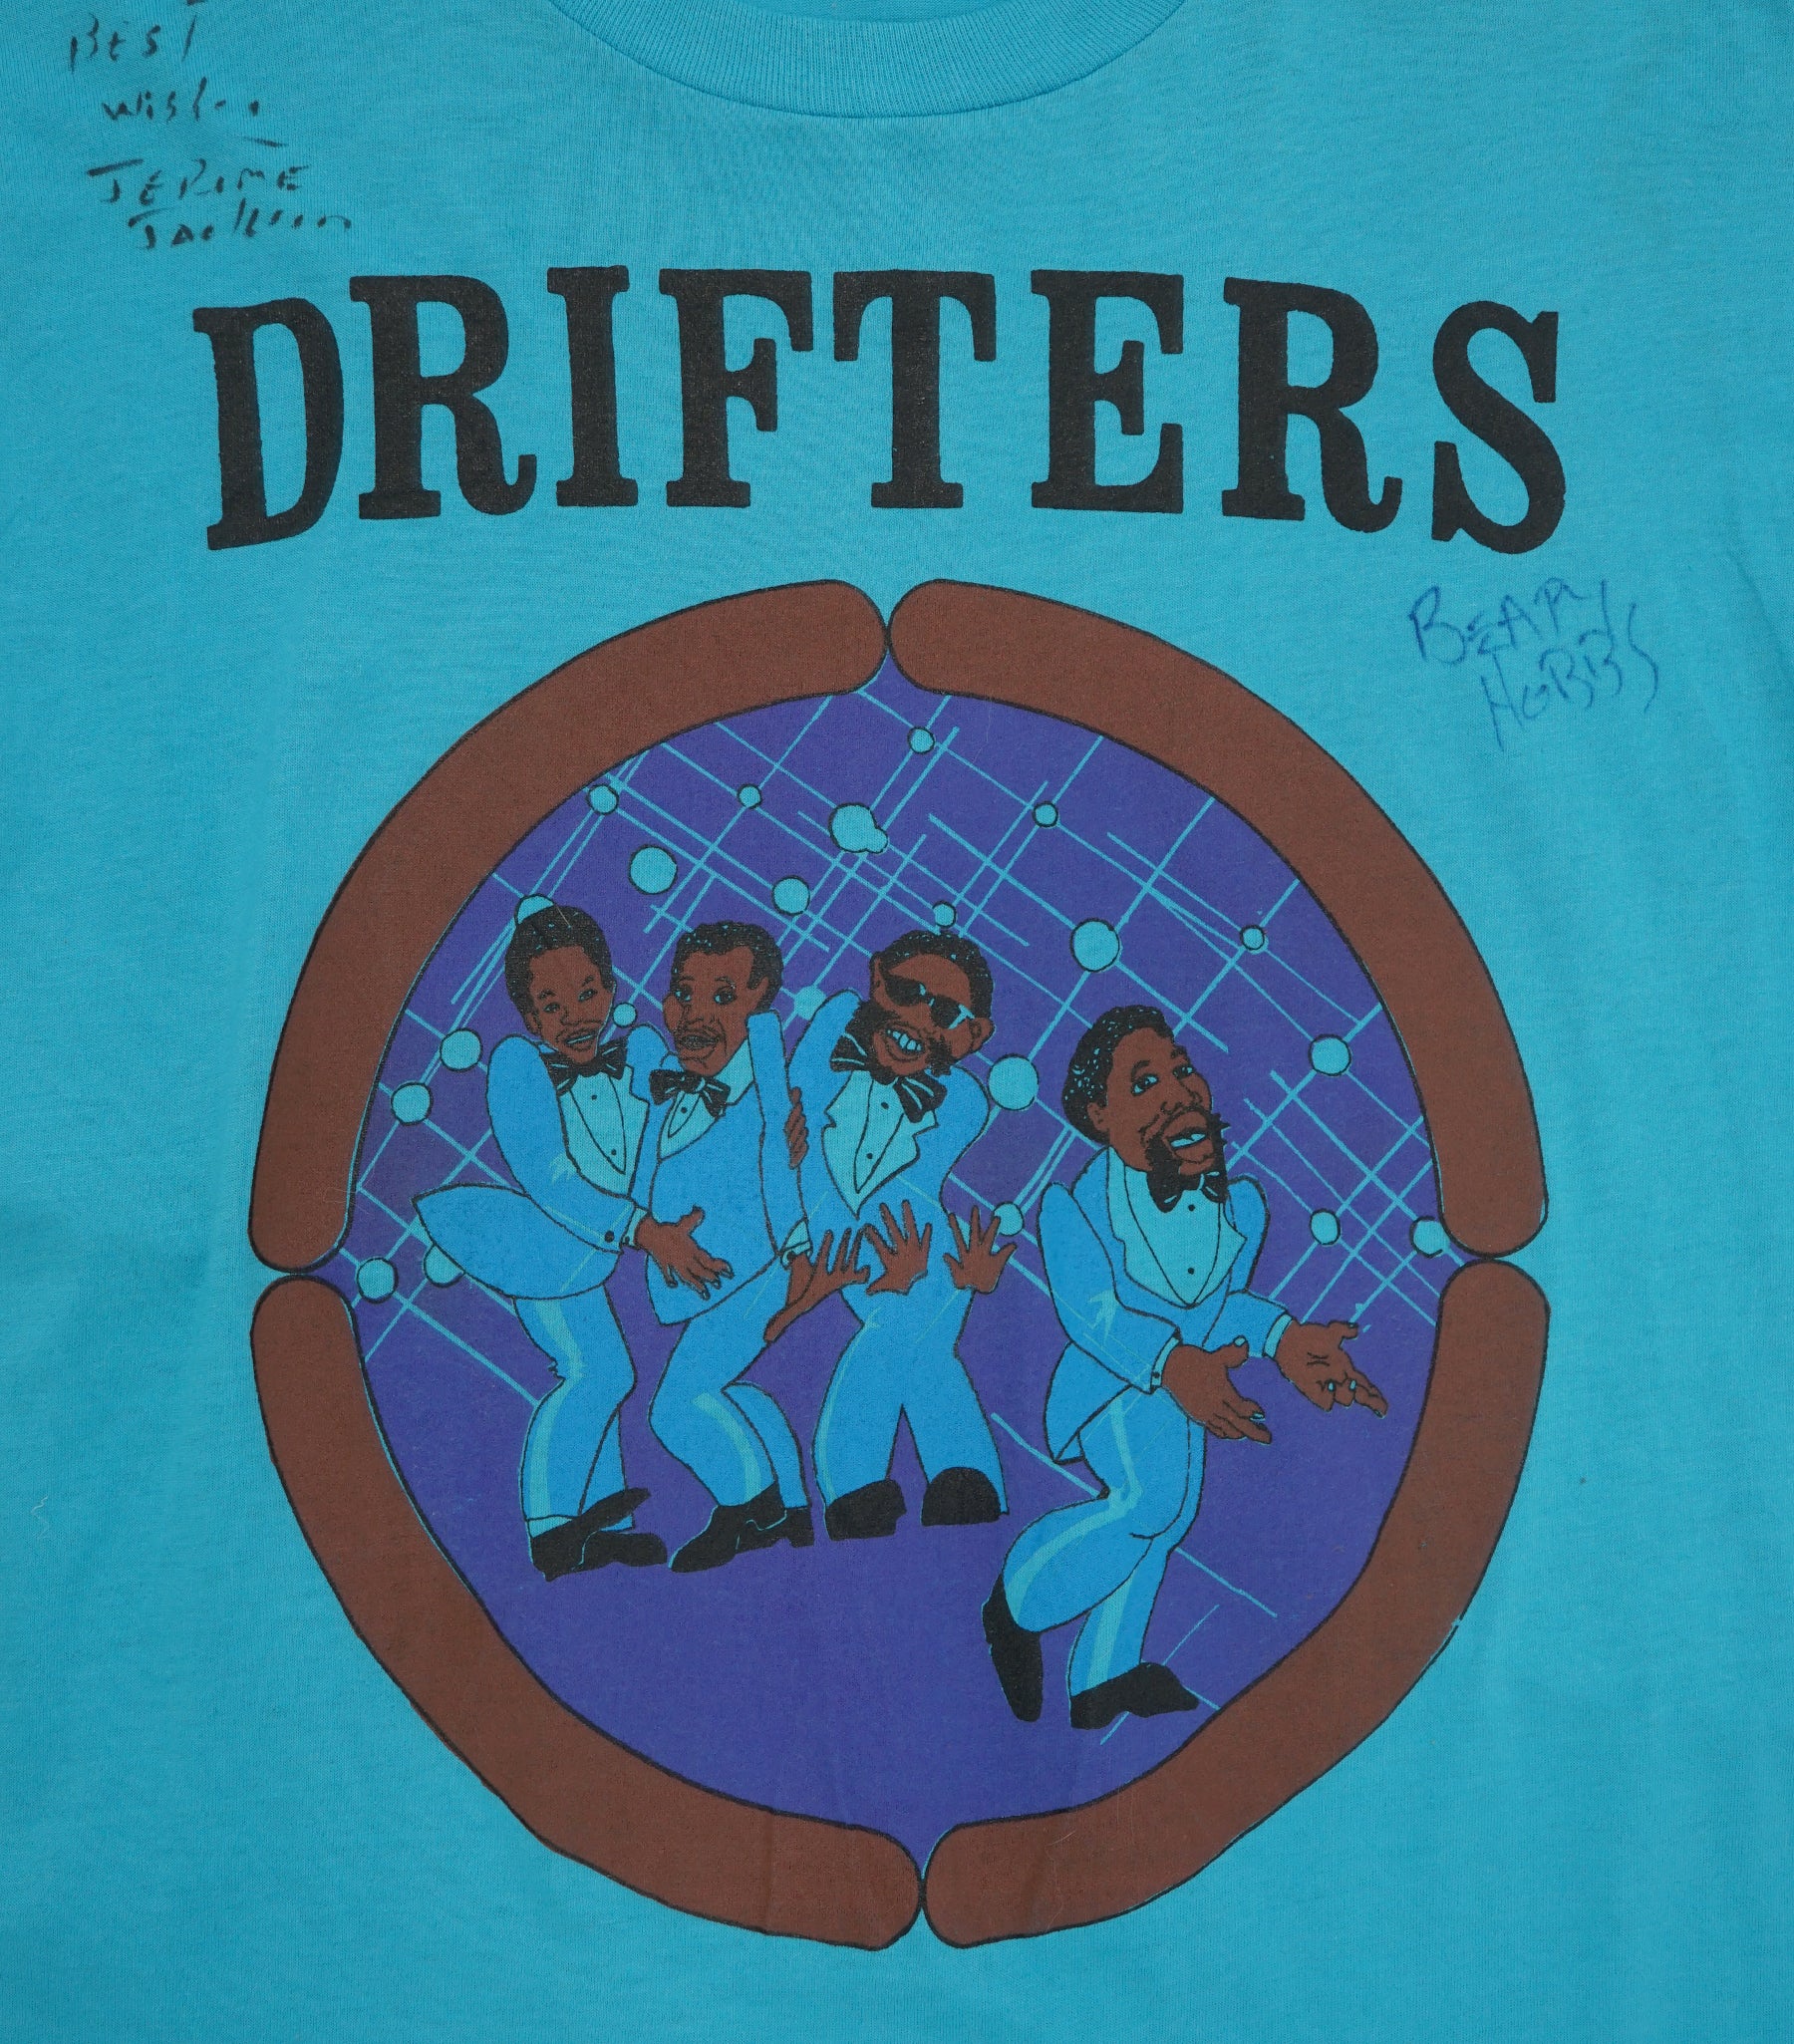 Drifters Tour Tee Shirts